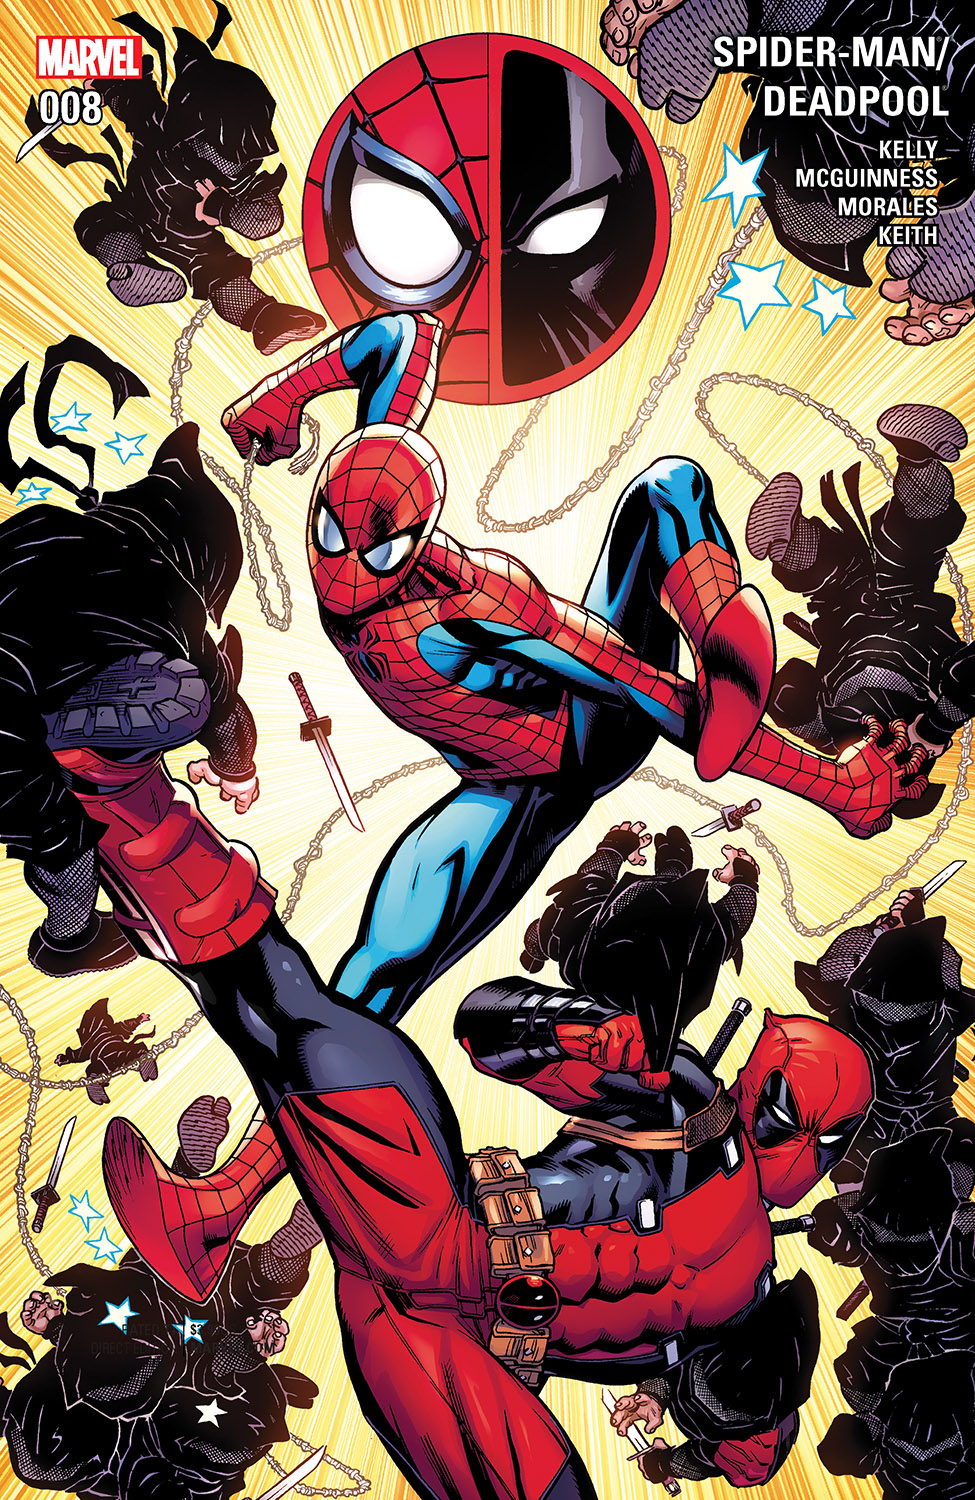 Spider-Man/Deadpool (2016) #8